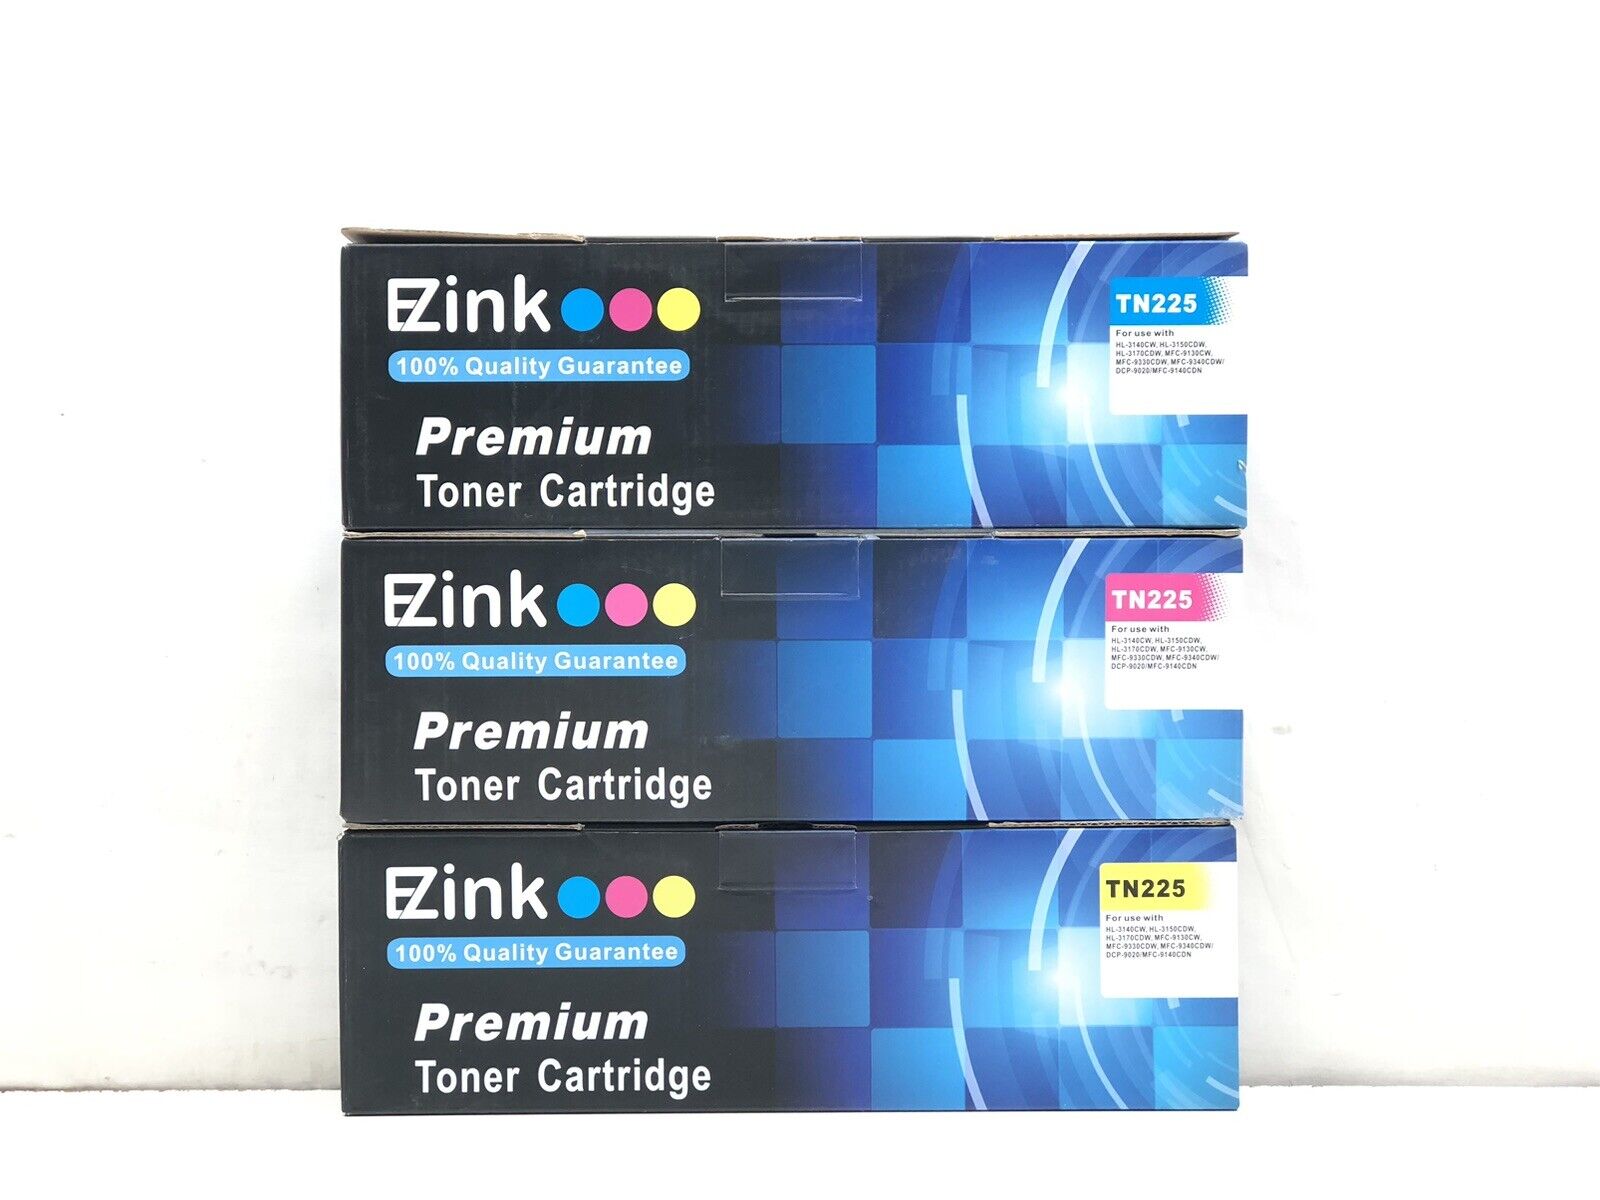 Lot of 3 EZInk Premium Toner Cartridge TN225 Cyan, Magenta & Yellow